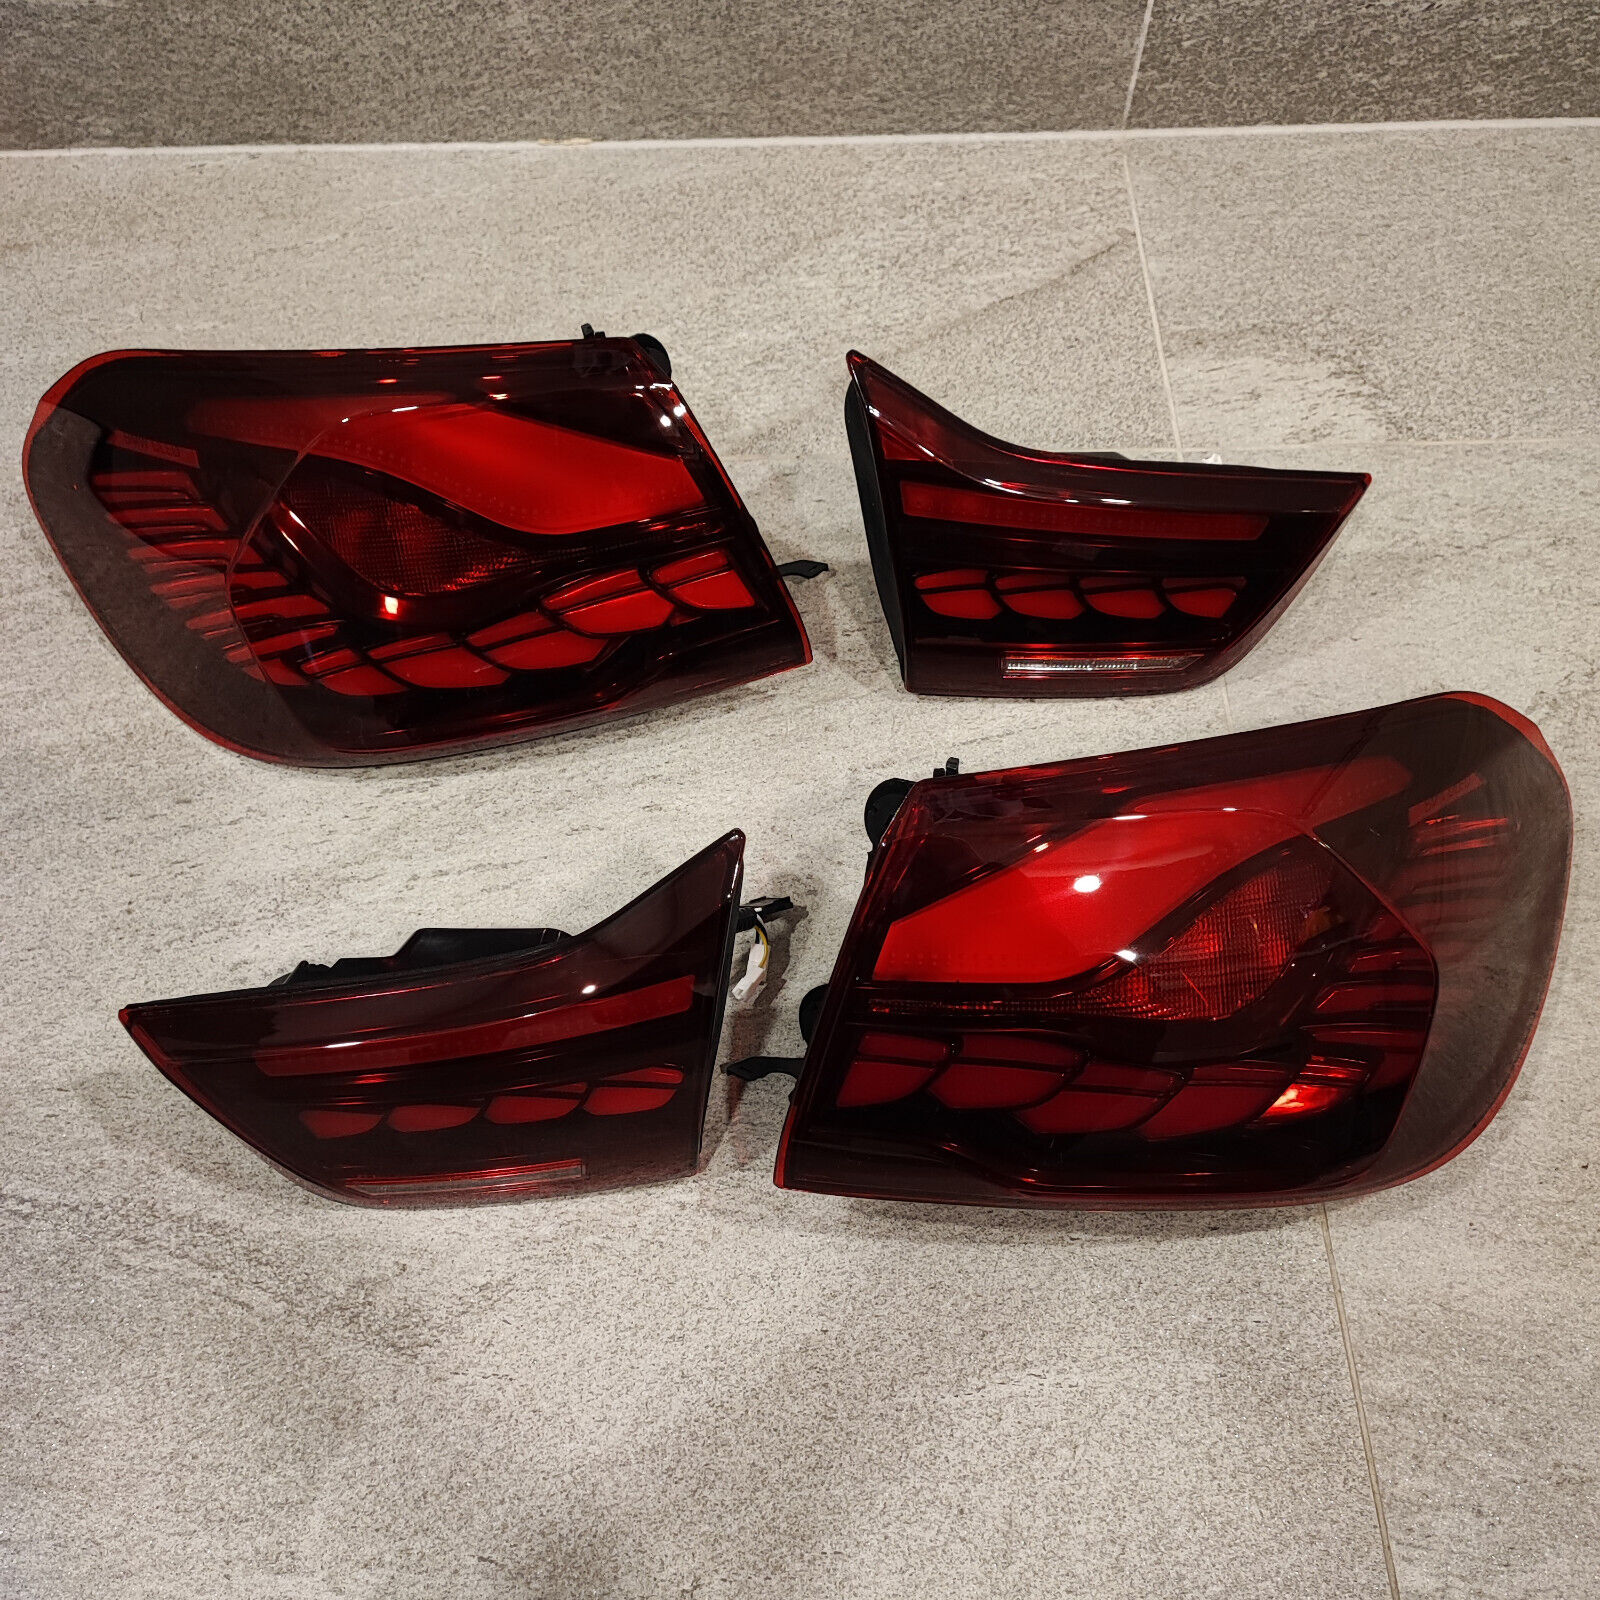 OLED GTS tail lights lamps for 2014-2020 BMW M4 4 Series F32 F33 F36 F82 F83